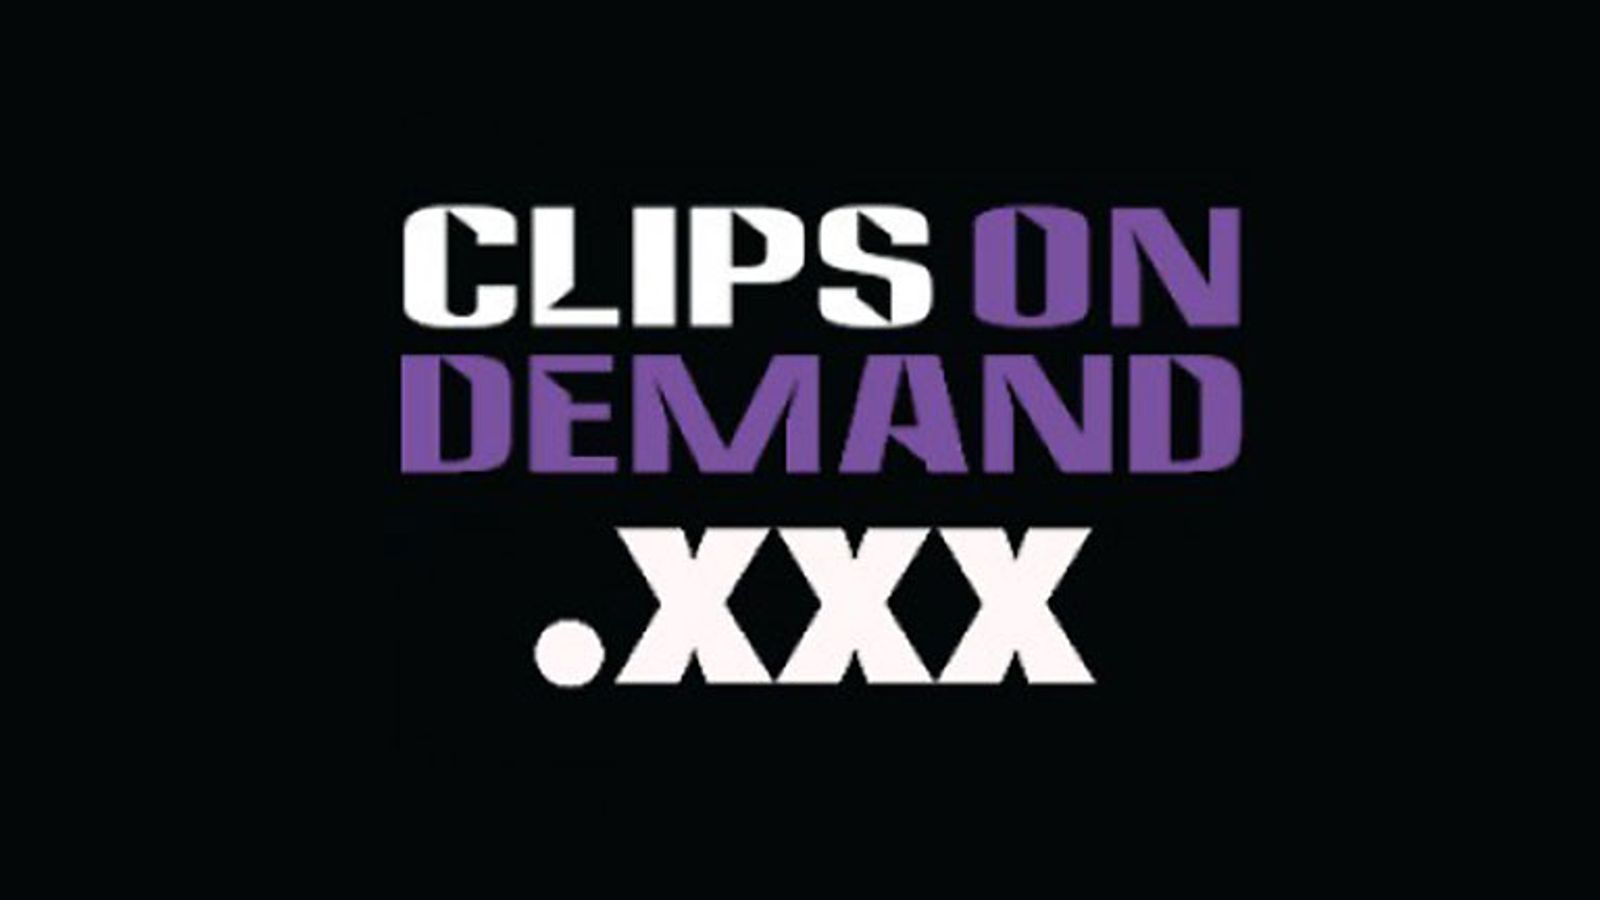 ClipsOnDemand.xxx's Entire Portfolio Is Up For Sale